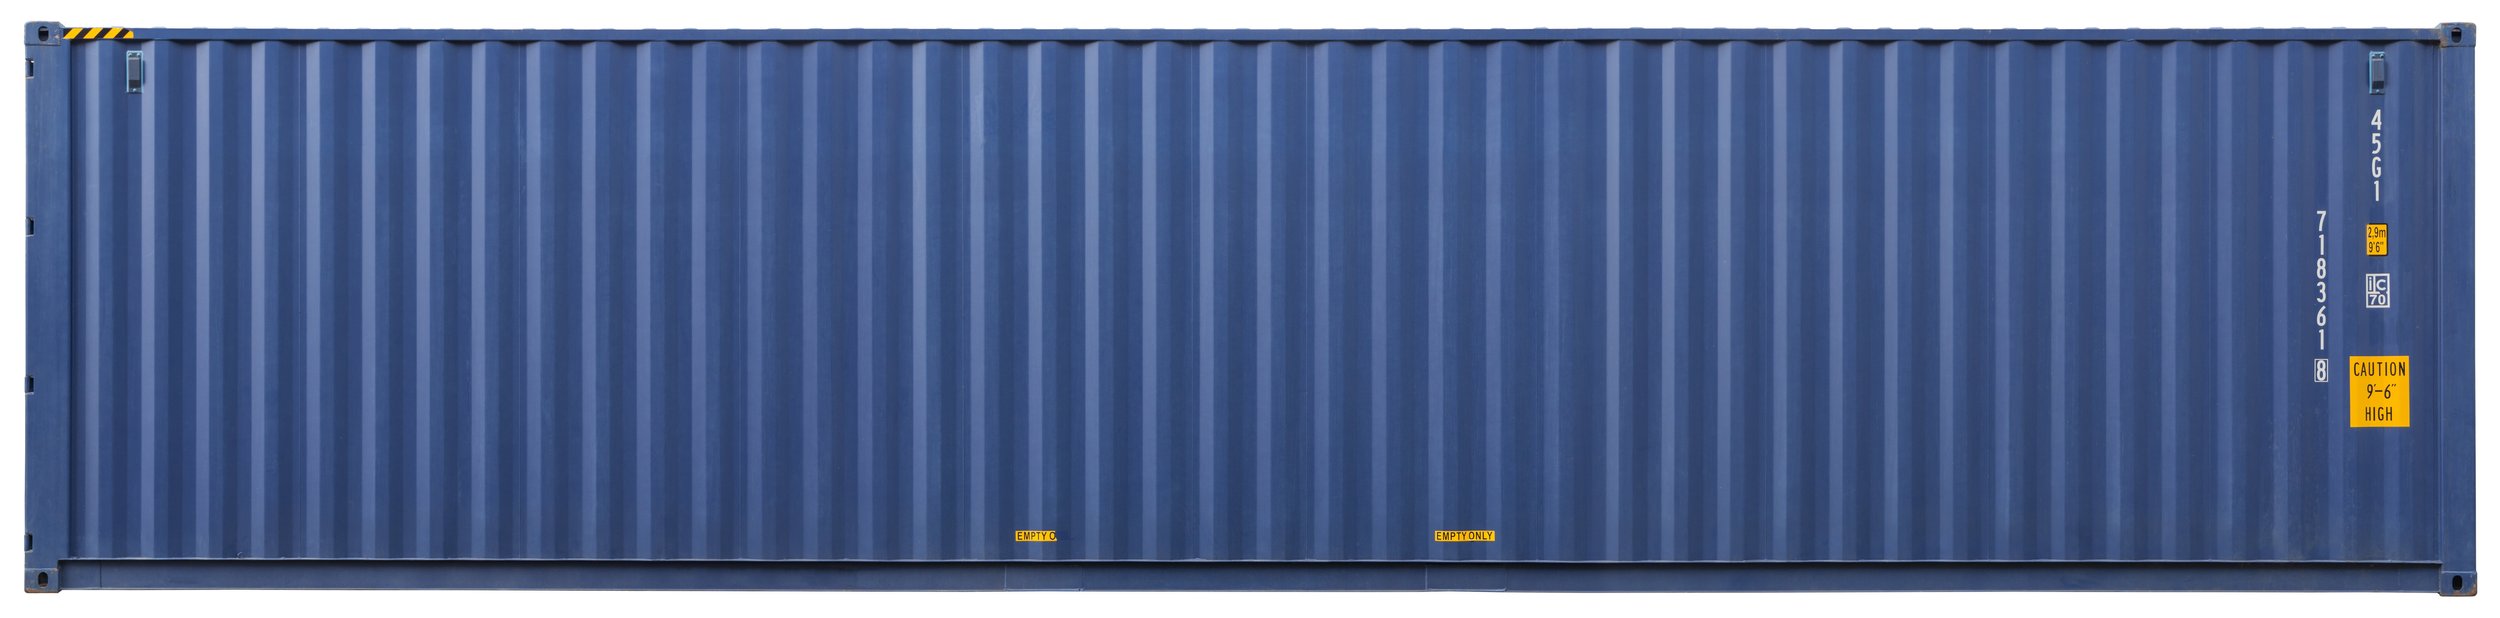 Container marittimo 40 fuss.jpeg